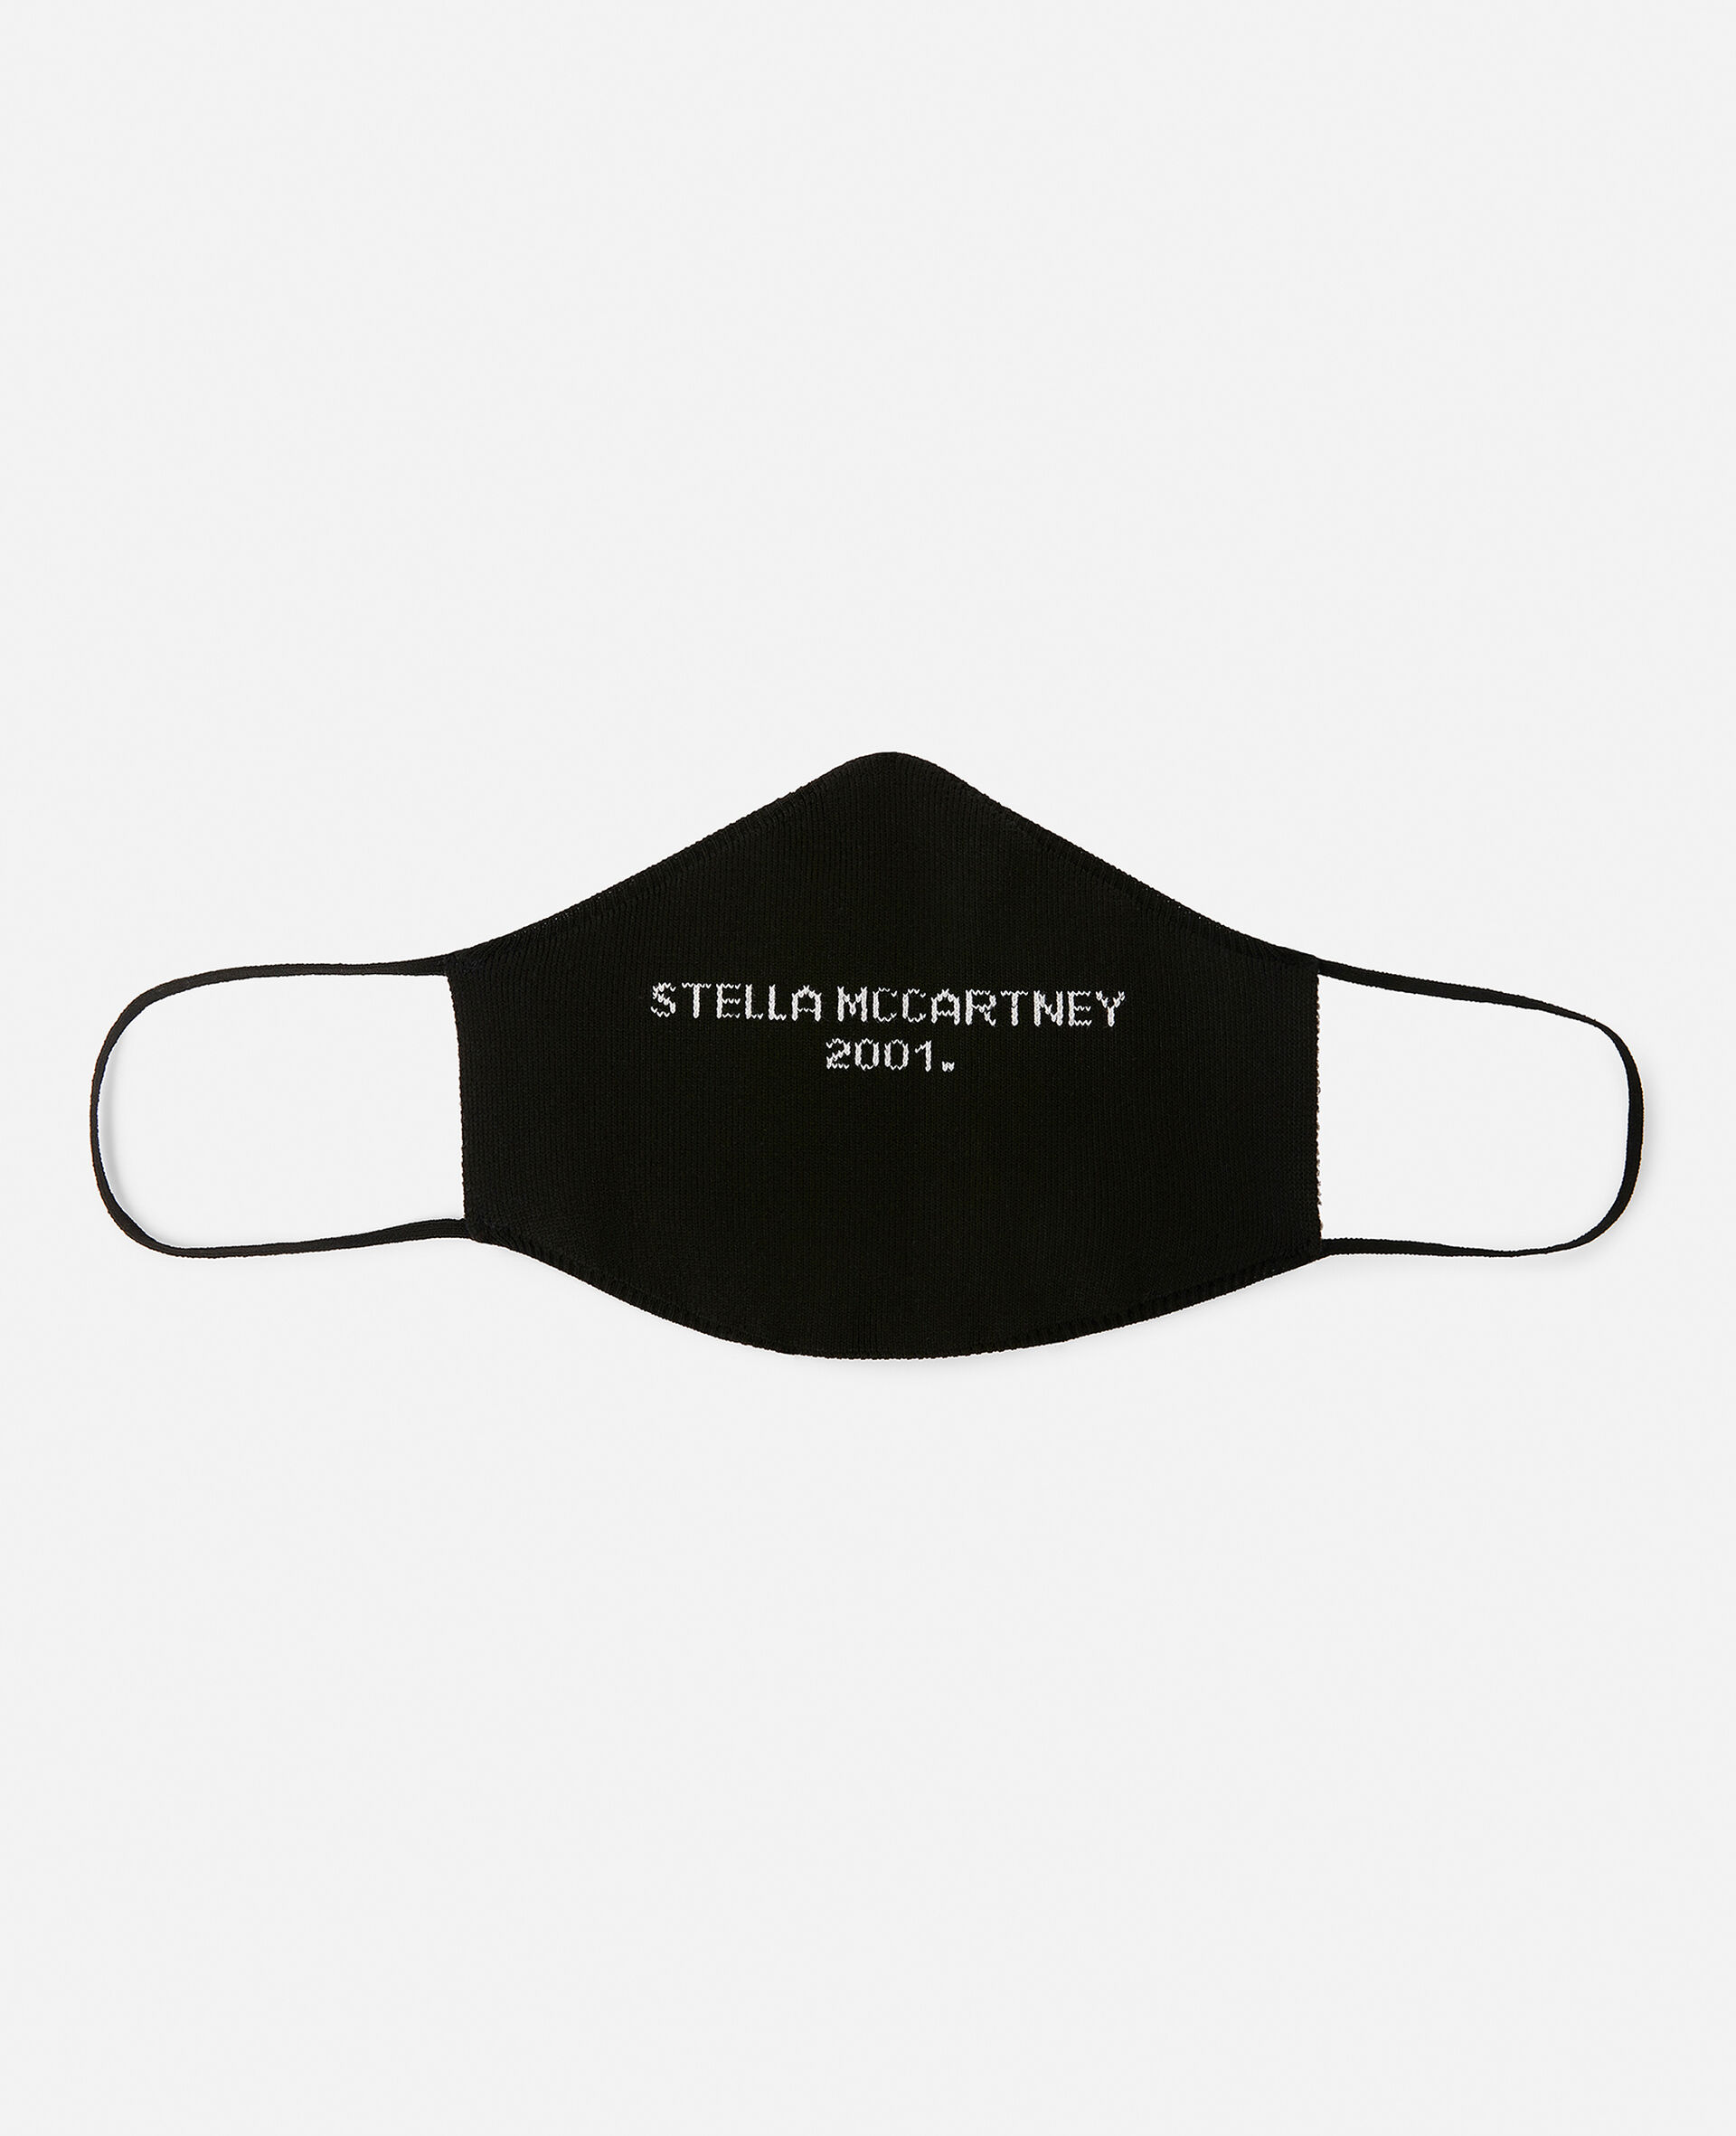 'Stella McCartney 2001’ Face Mask -Black-large image number 0